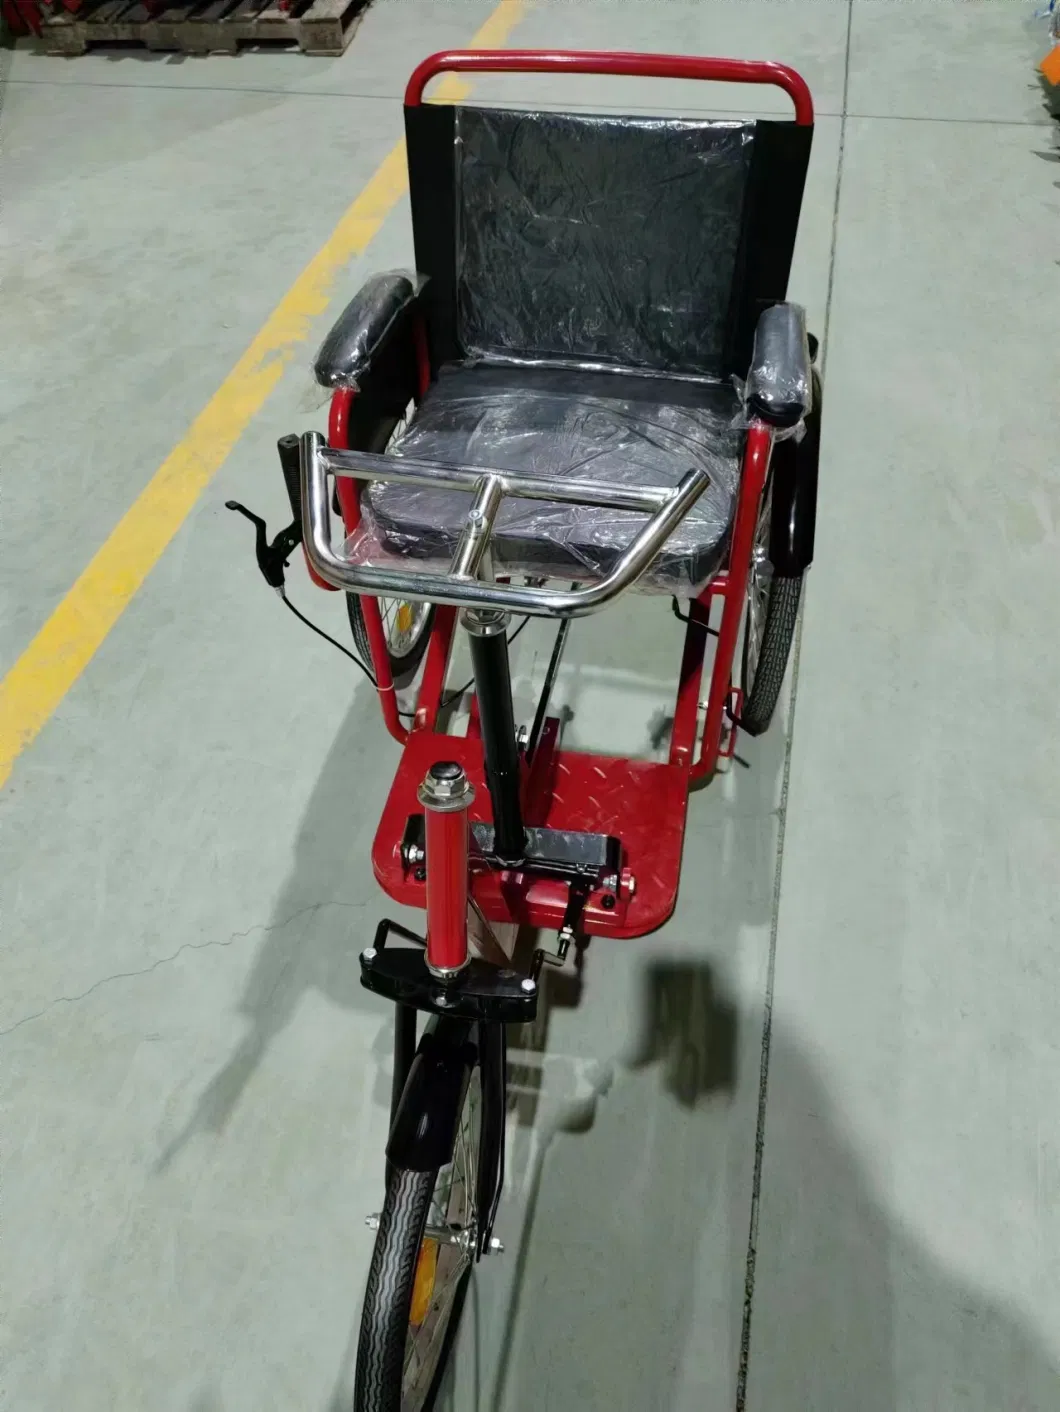 Three Wheel Electric Mini Scooter Tricy Passenger Comfortable Tricycle Handbike Wheelchair Bike